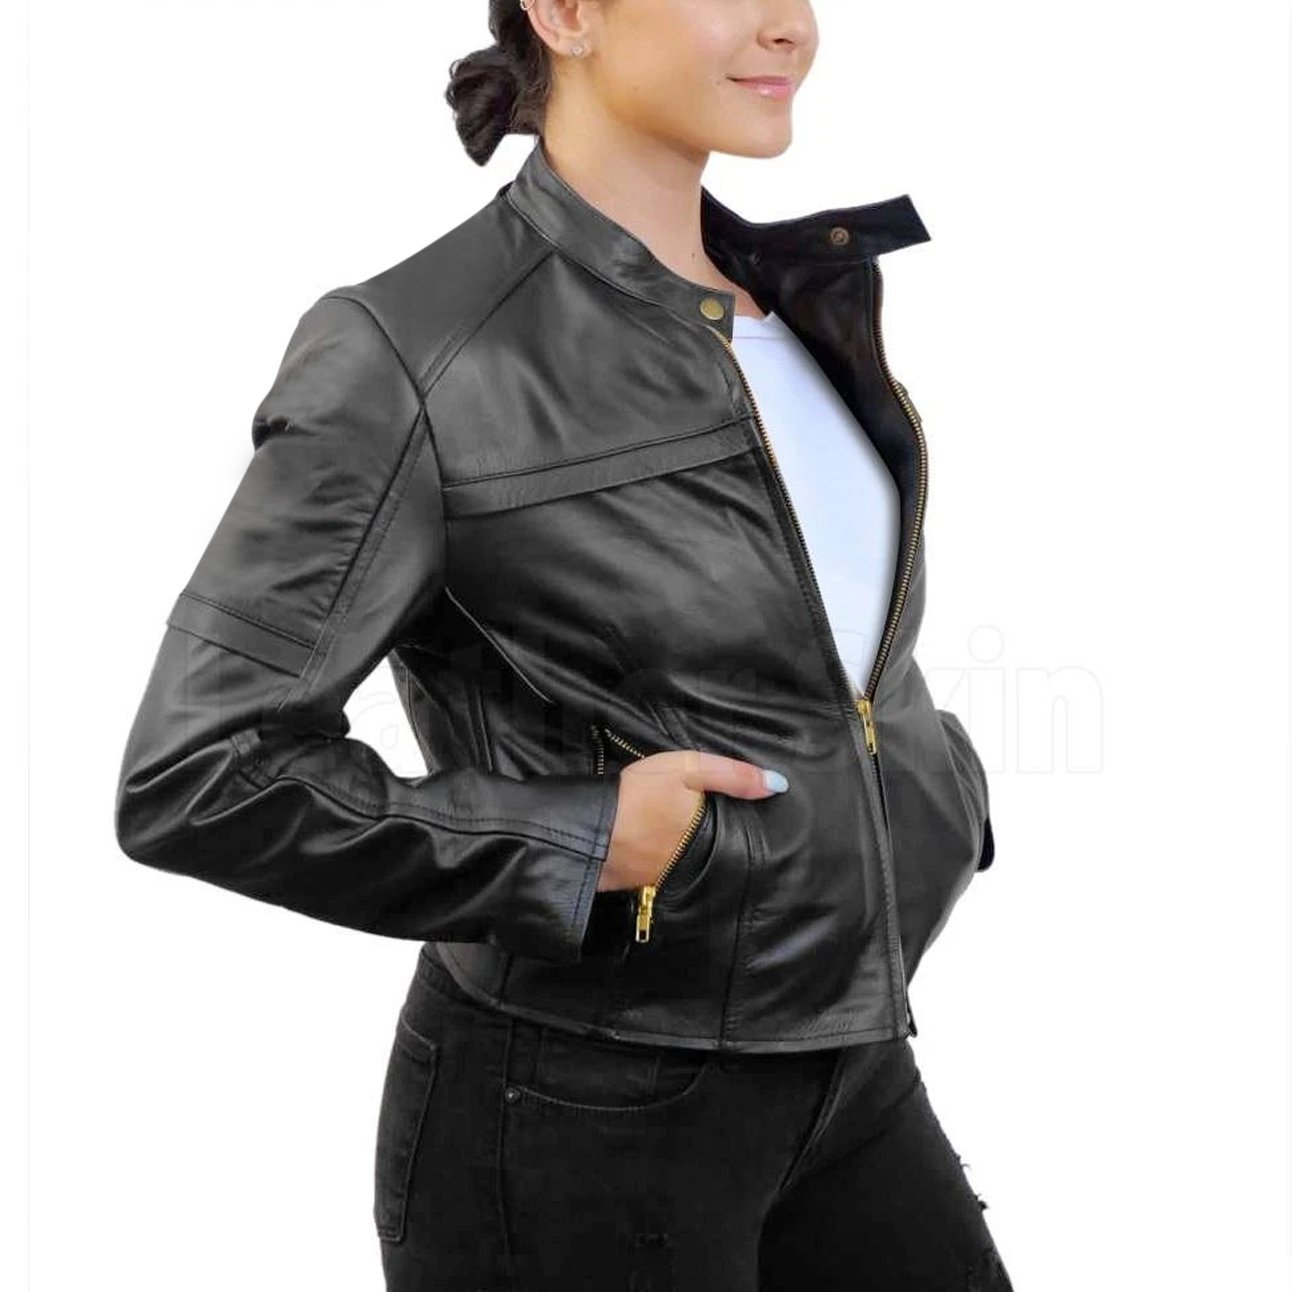 NWT Black Brando Women Genuine Leather Jacket - Leather Skin Shop